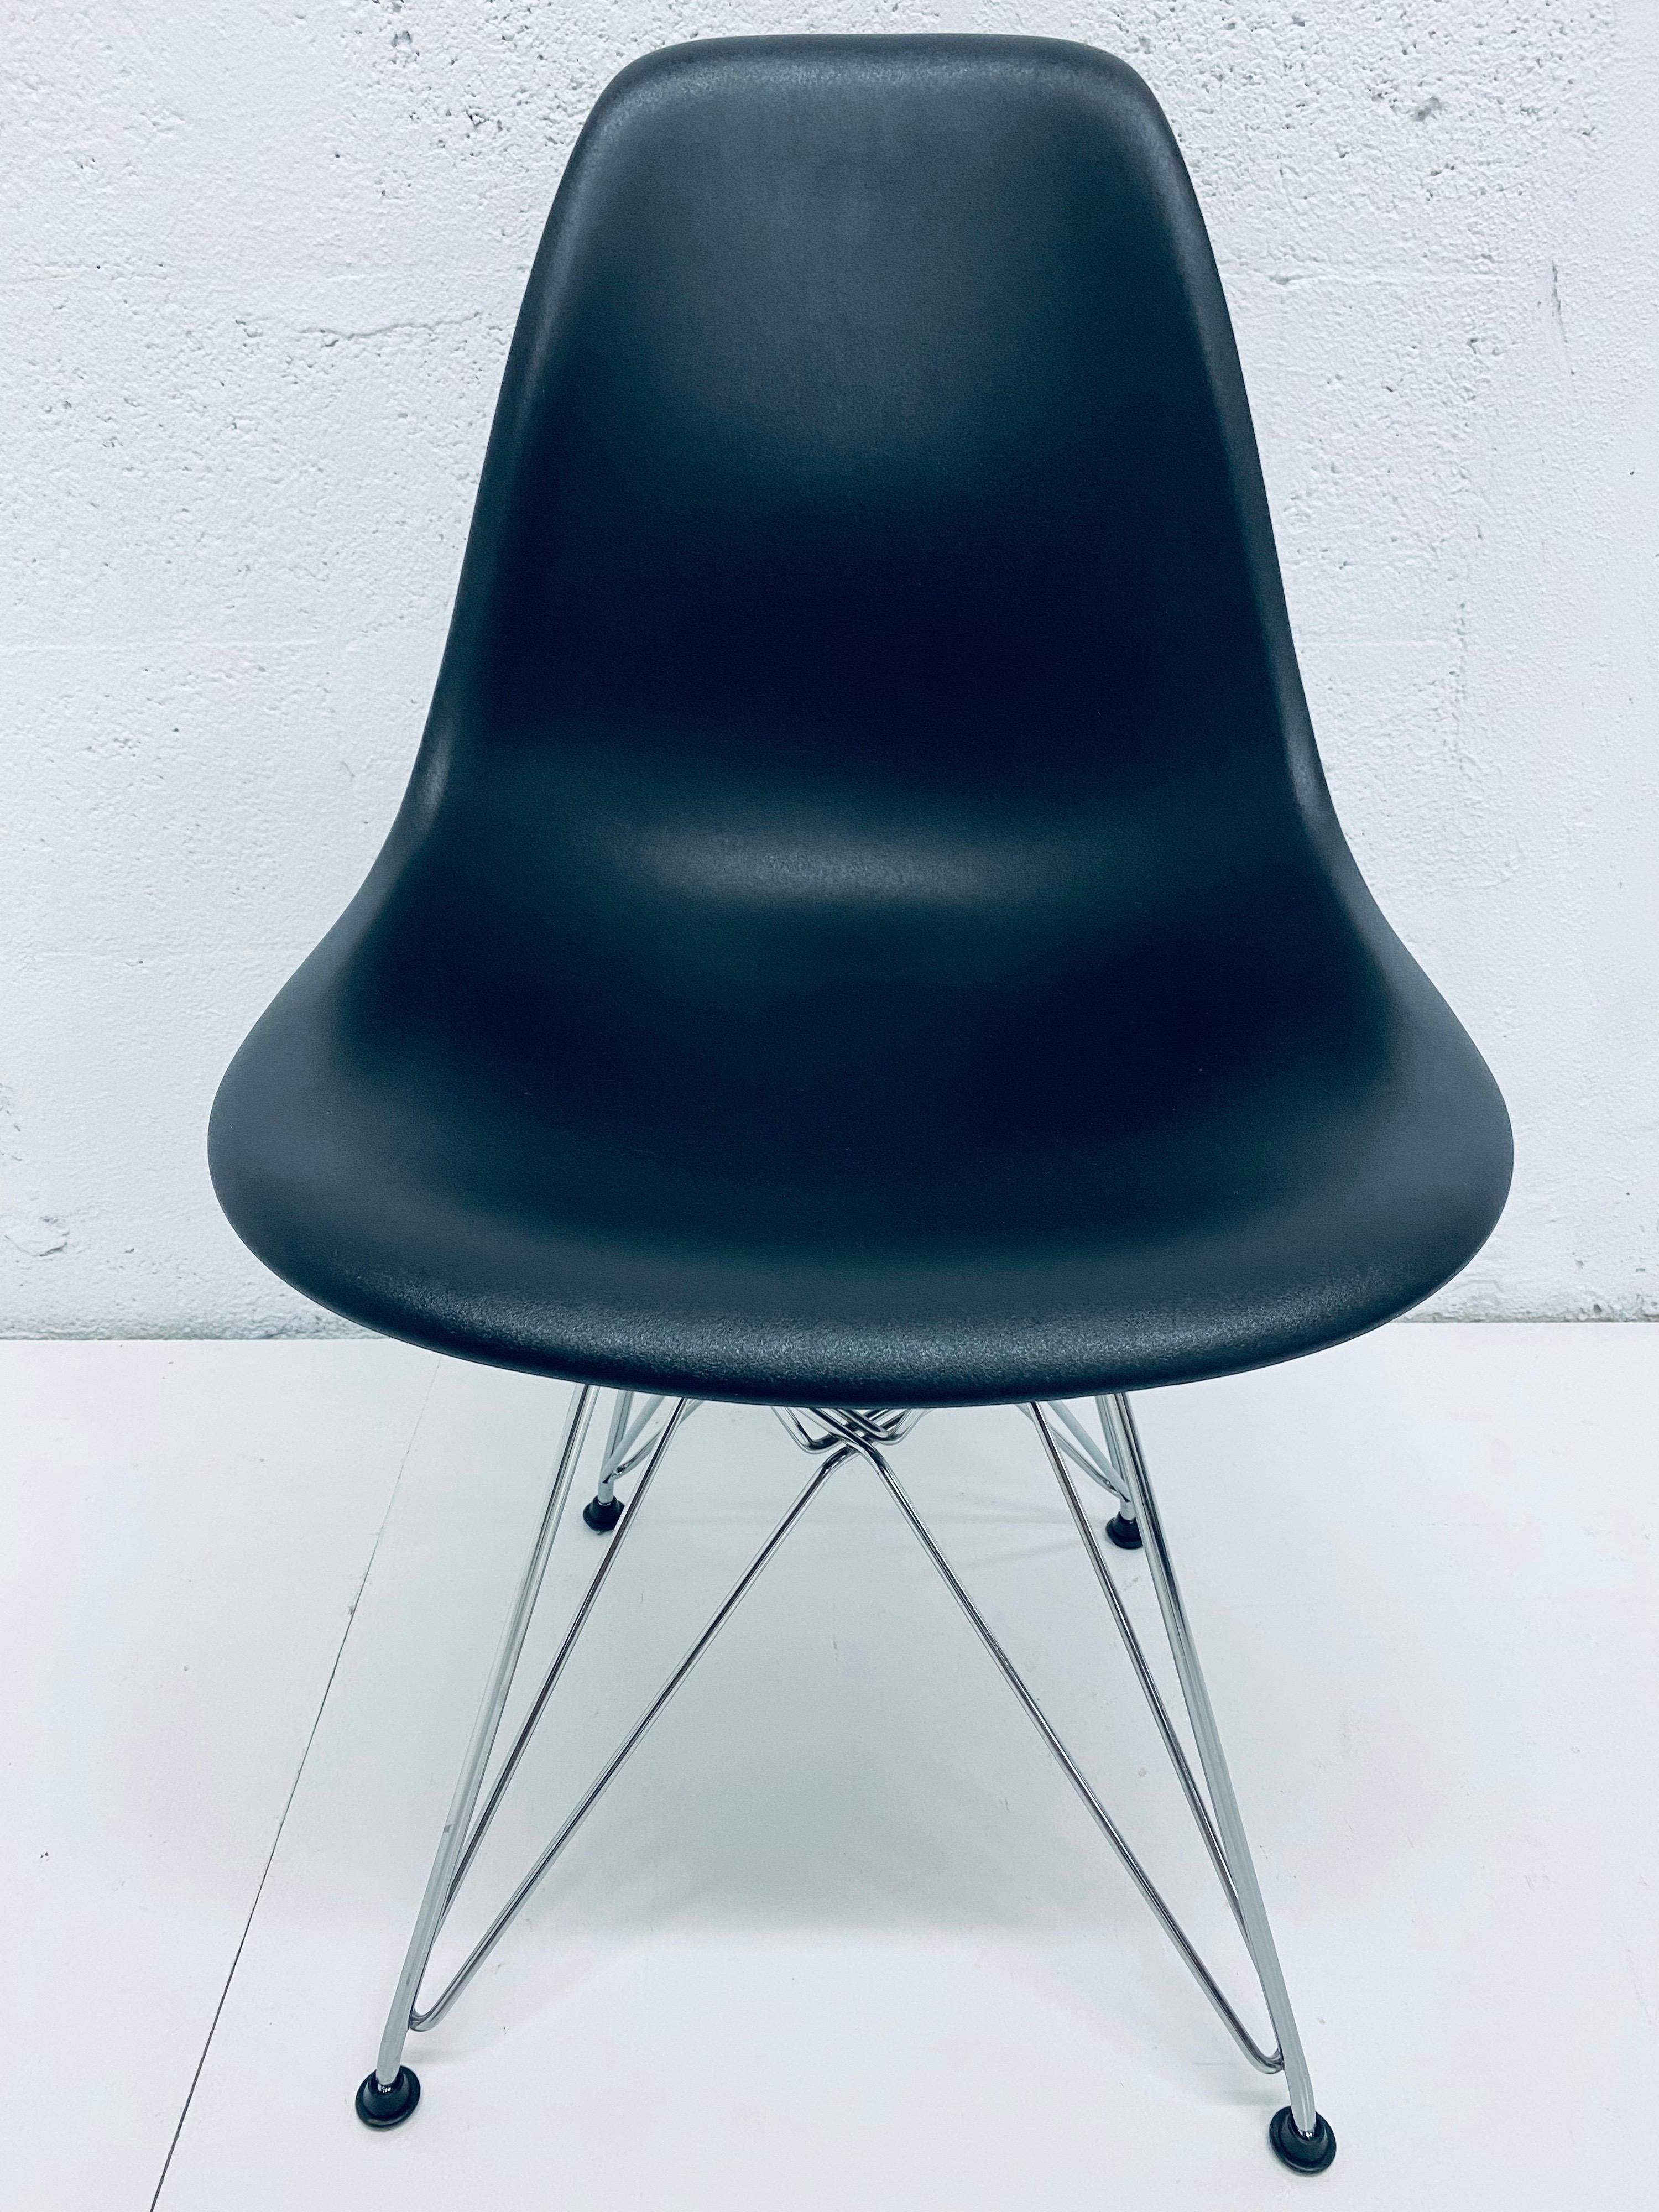 Pair of Eames Black Molded Plastic Side Chair for Herman Miller 1